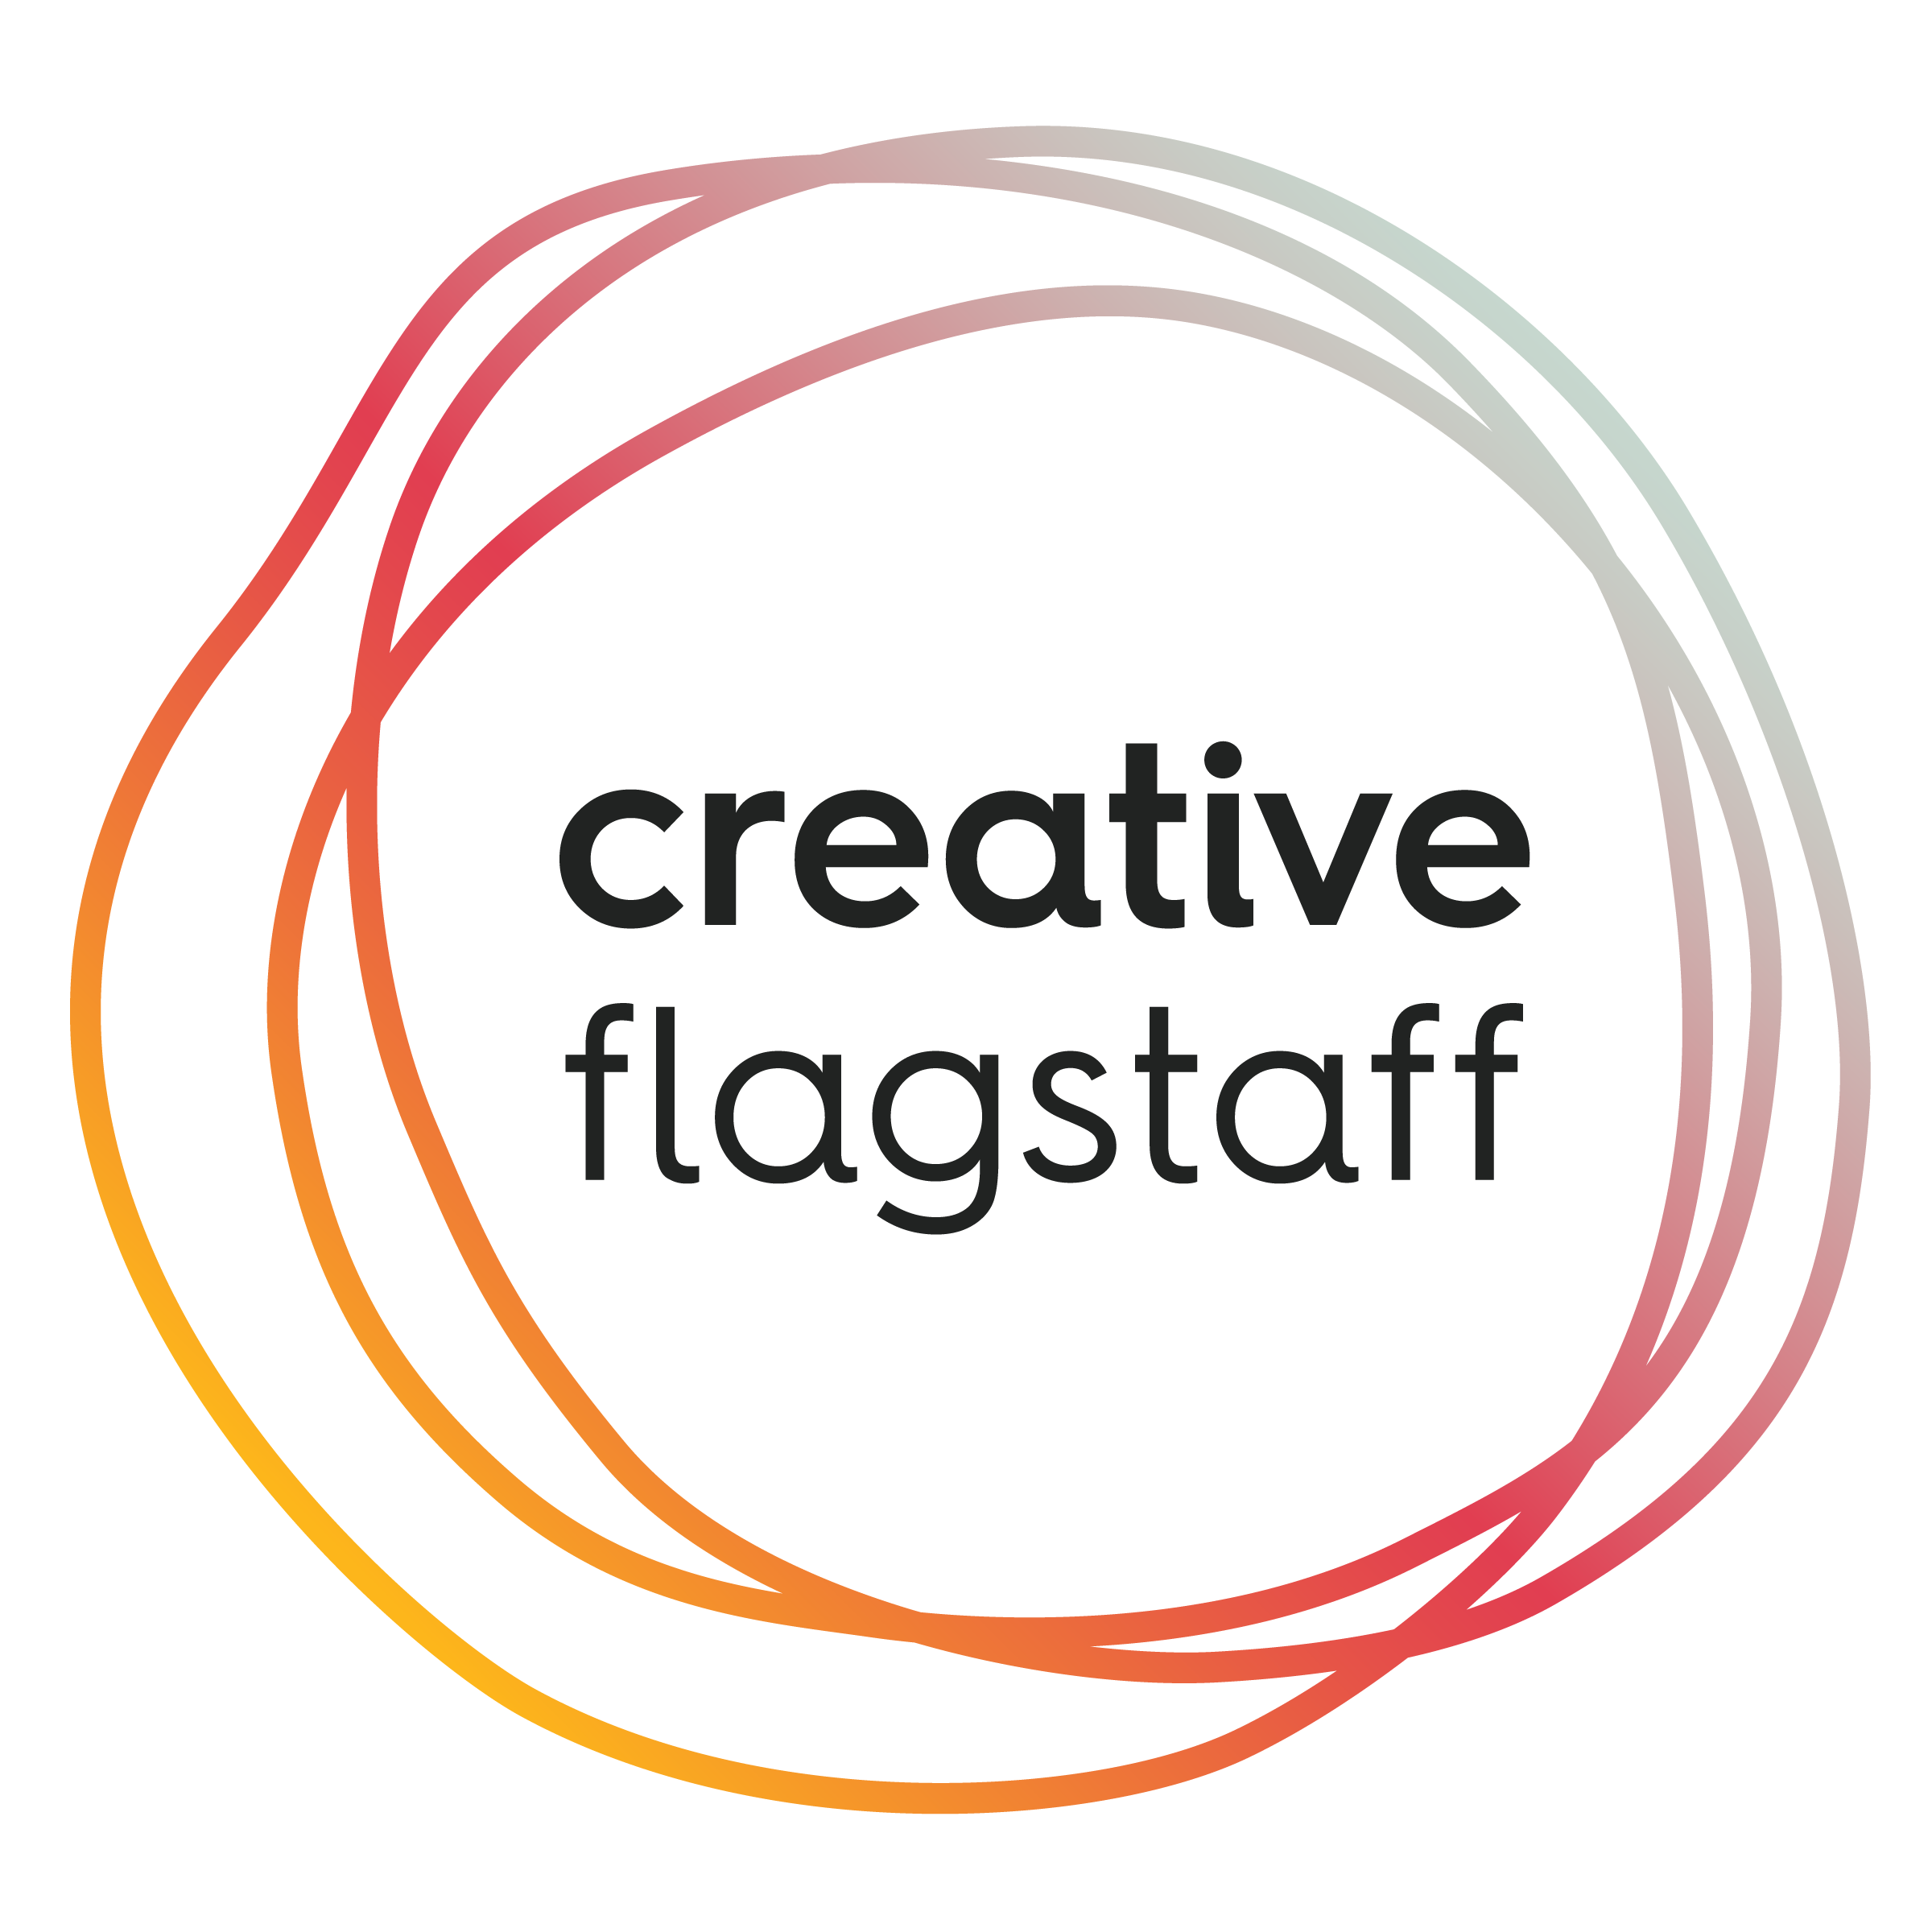 featured image:Creative Flagstaff